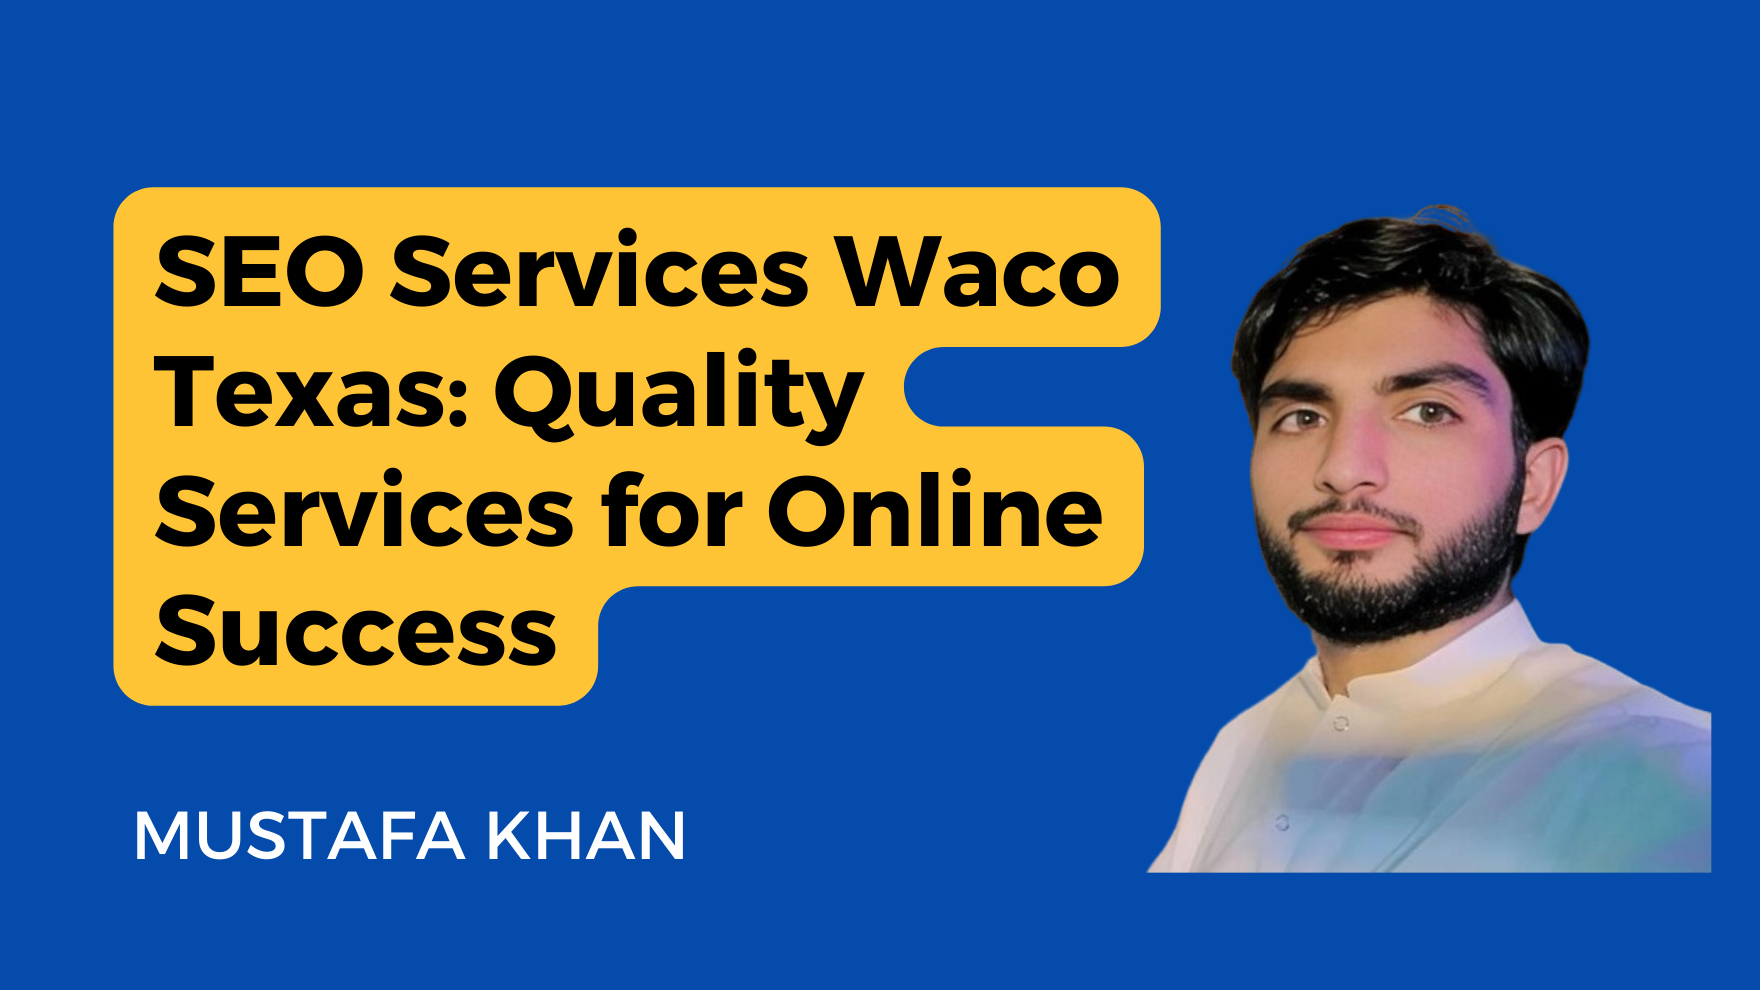 SEO Services Waco Texas: Quality Services for Online Success - Mustafa Khan